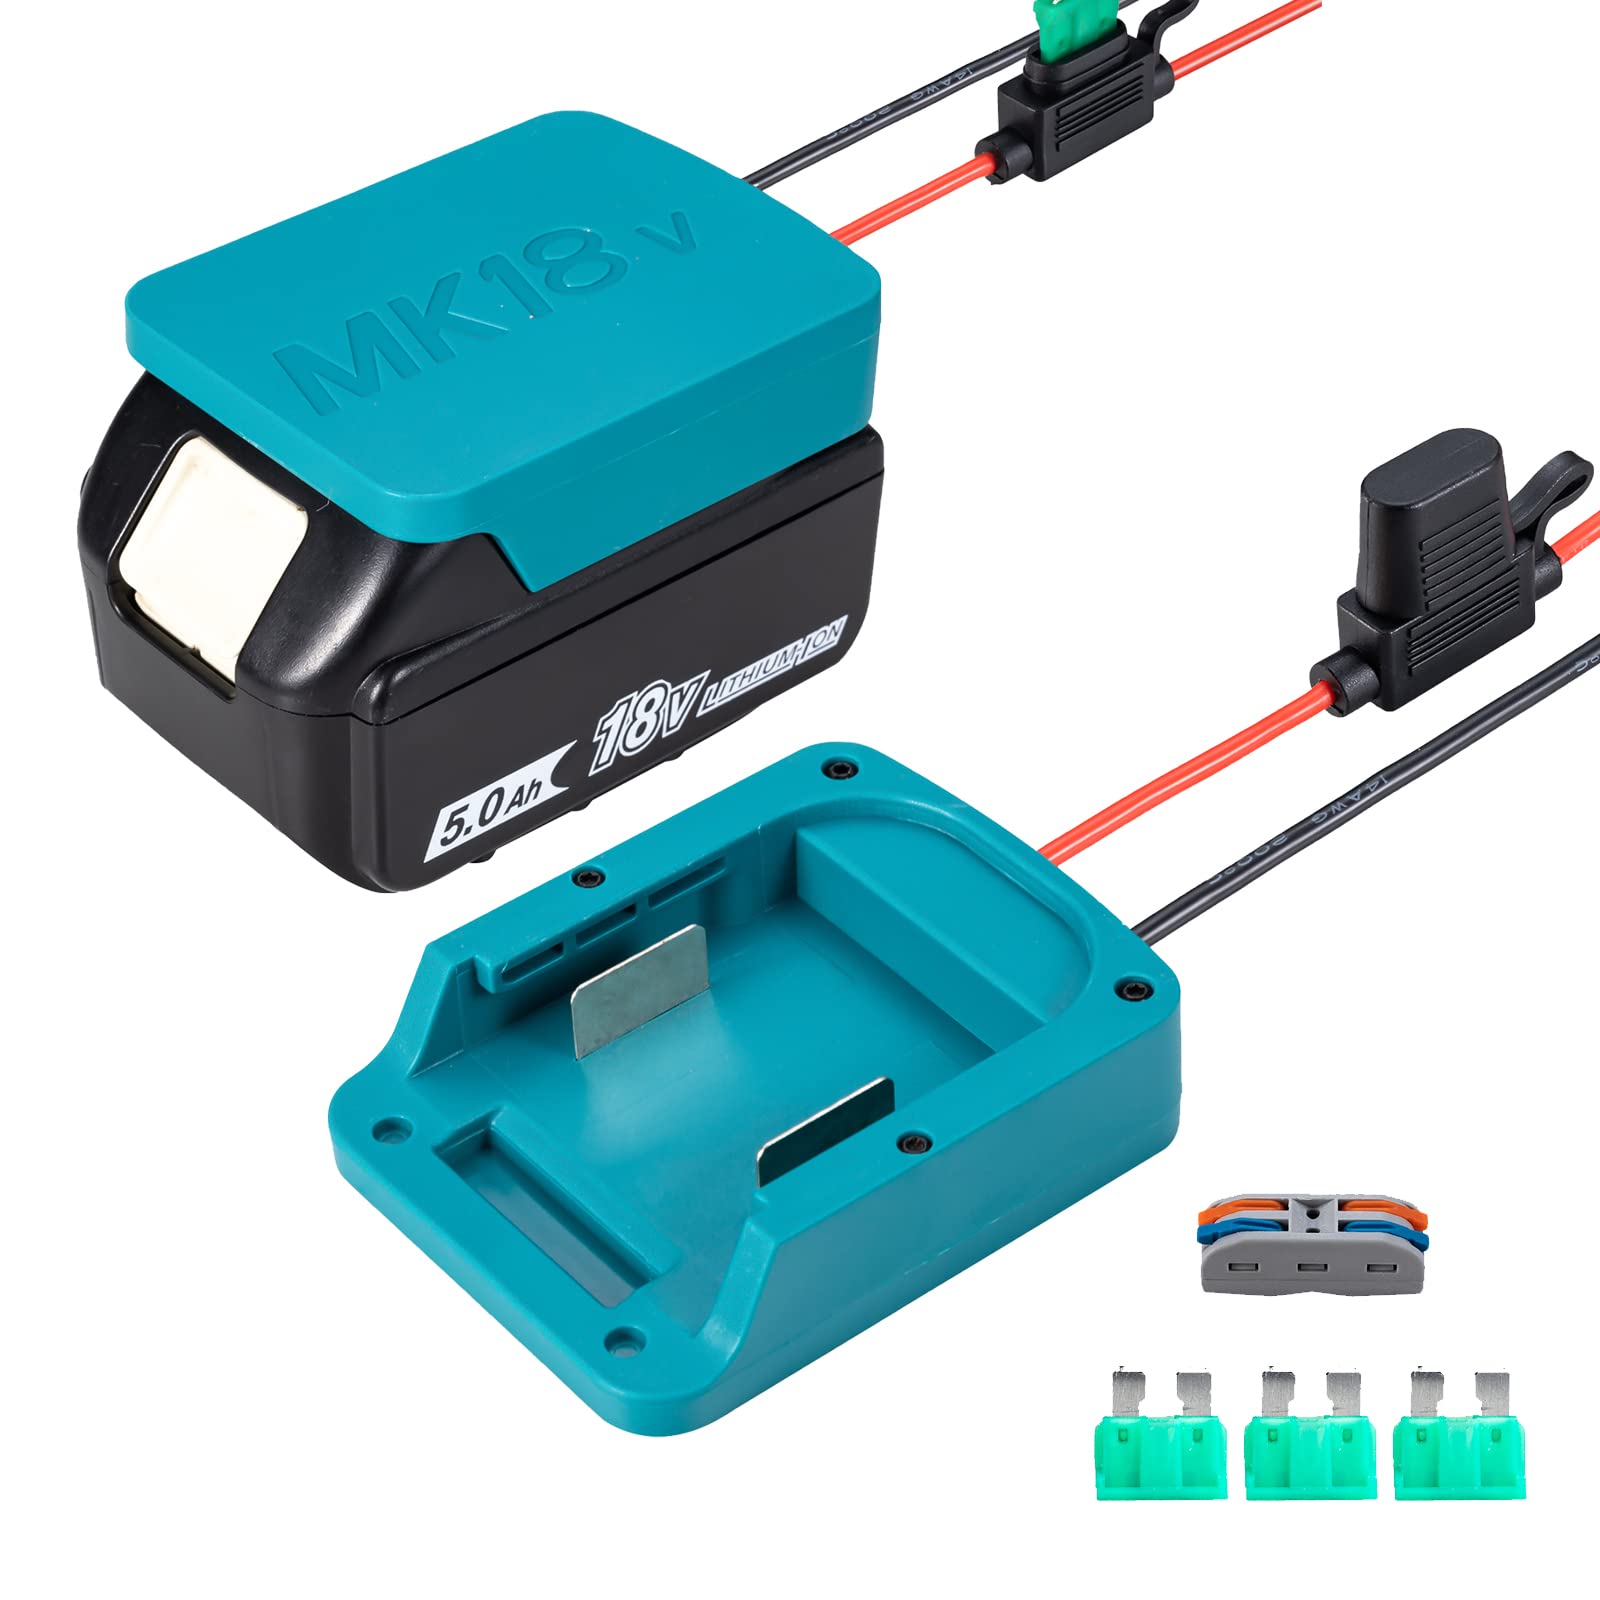 dewalt 12v battery adapter kit